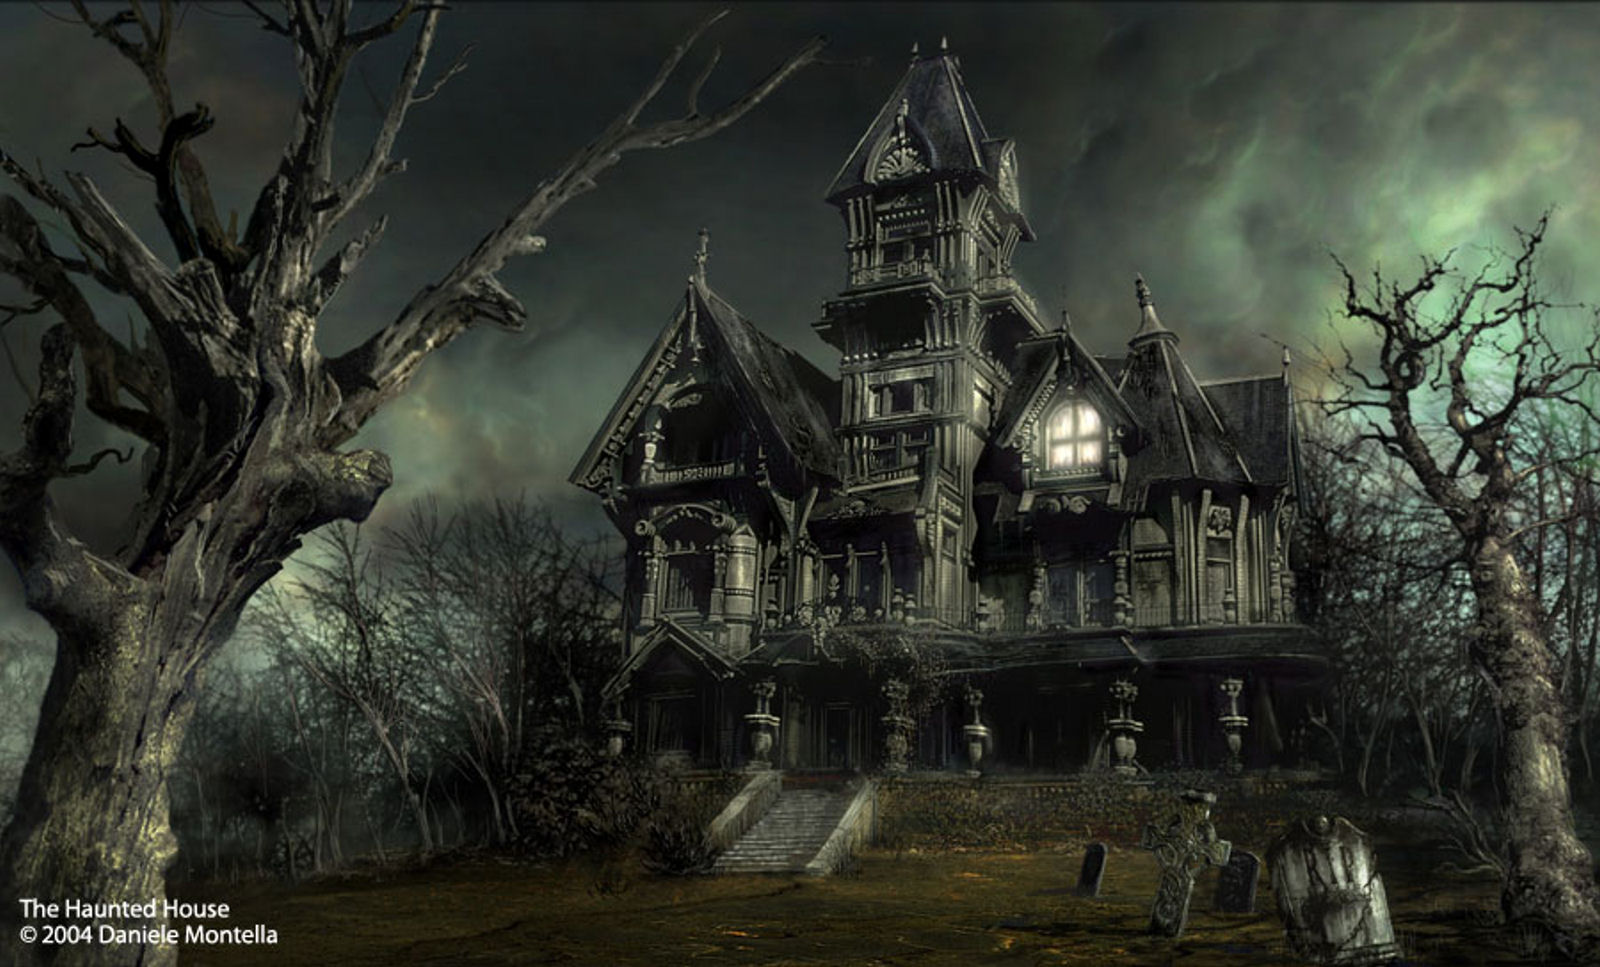 Haunted House by Daniele Montella